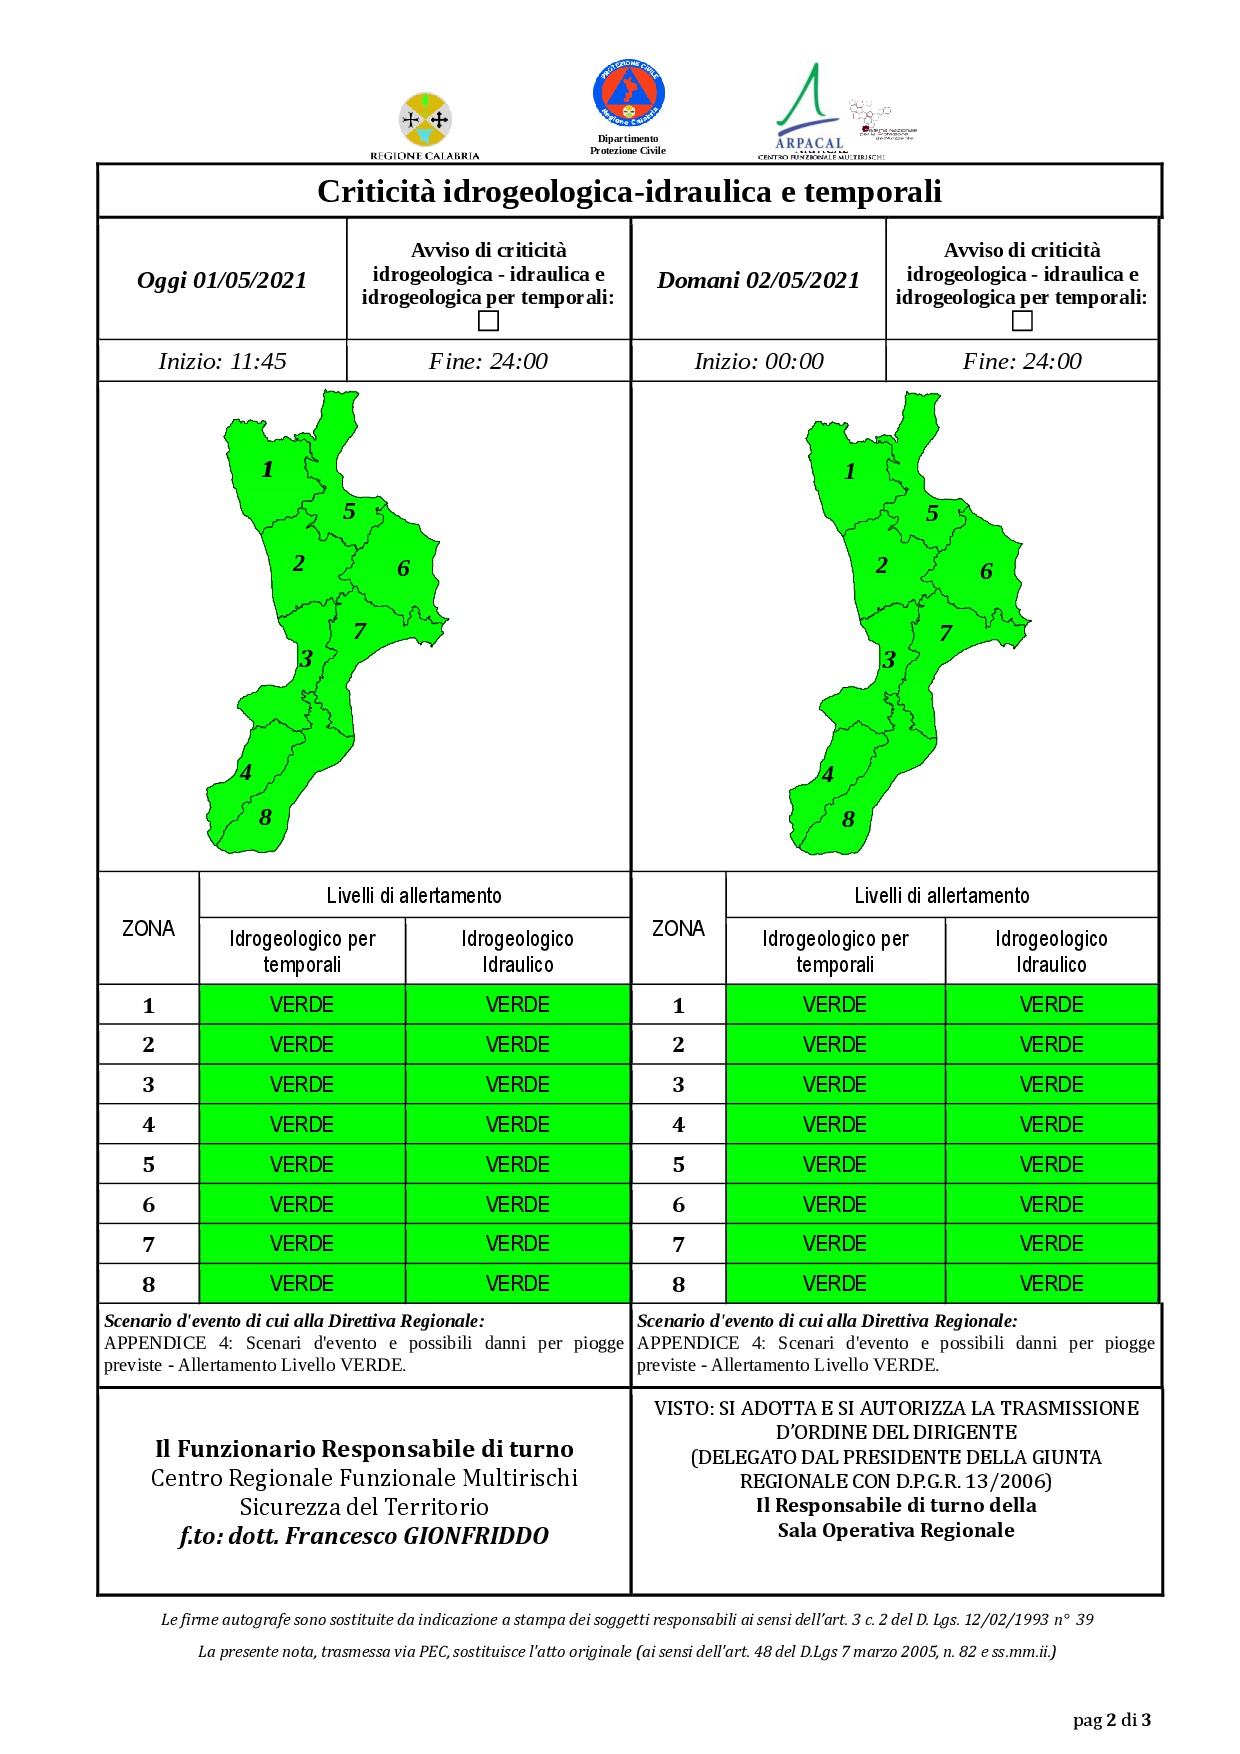 Criticità idrogeologica-idraulica e temporali in Calabria 01-05-2021